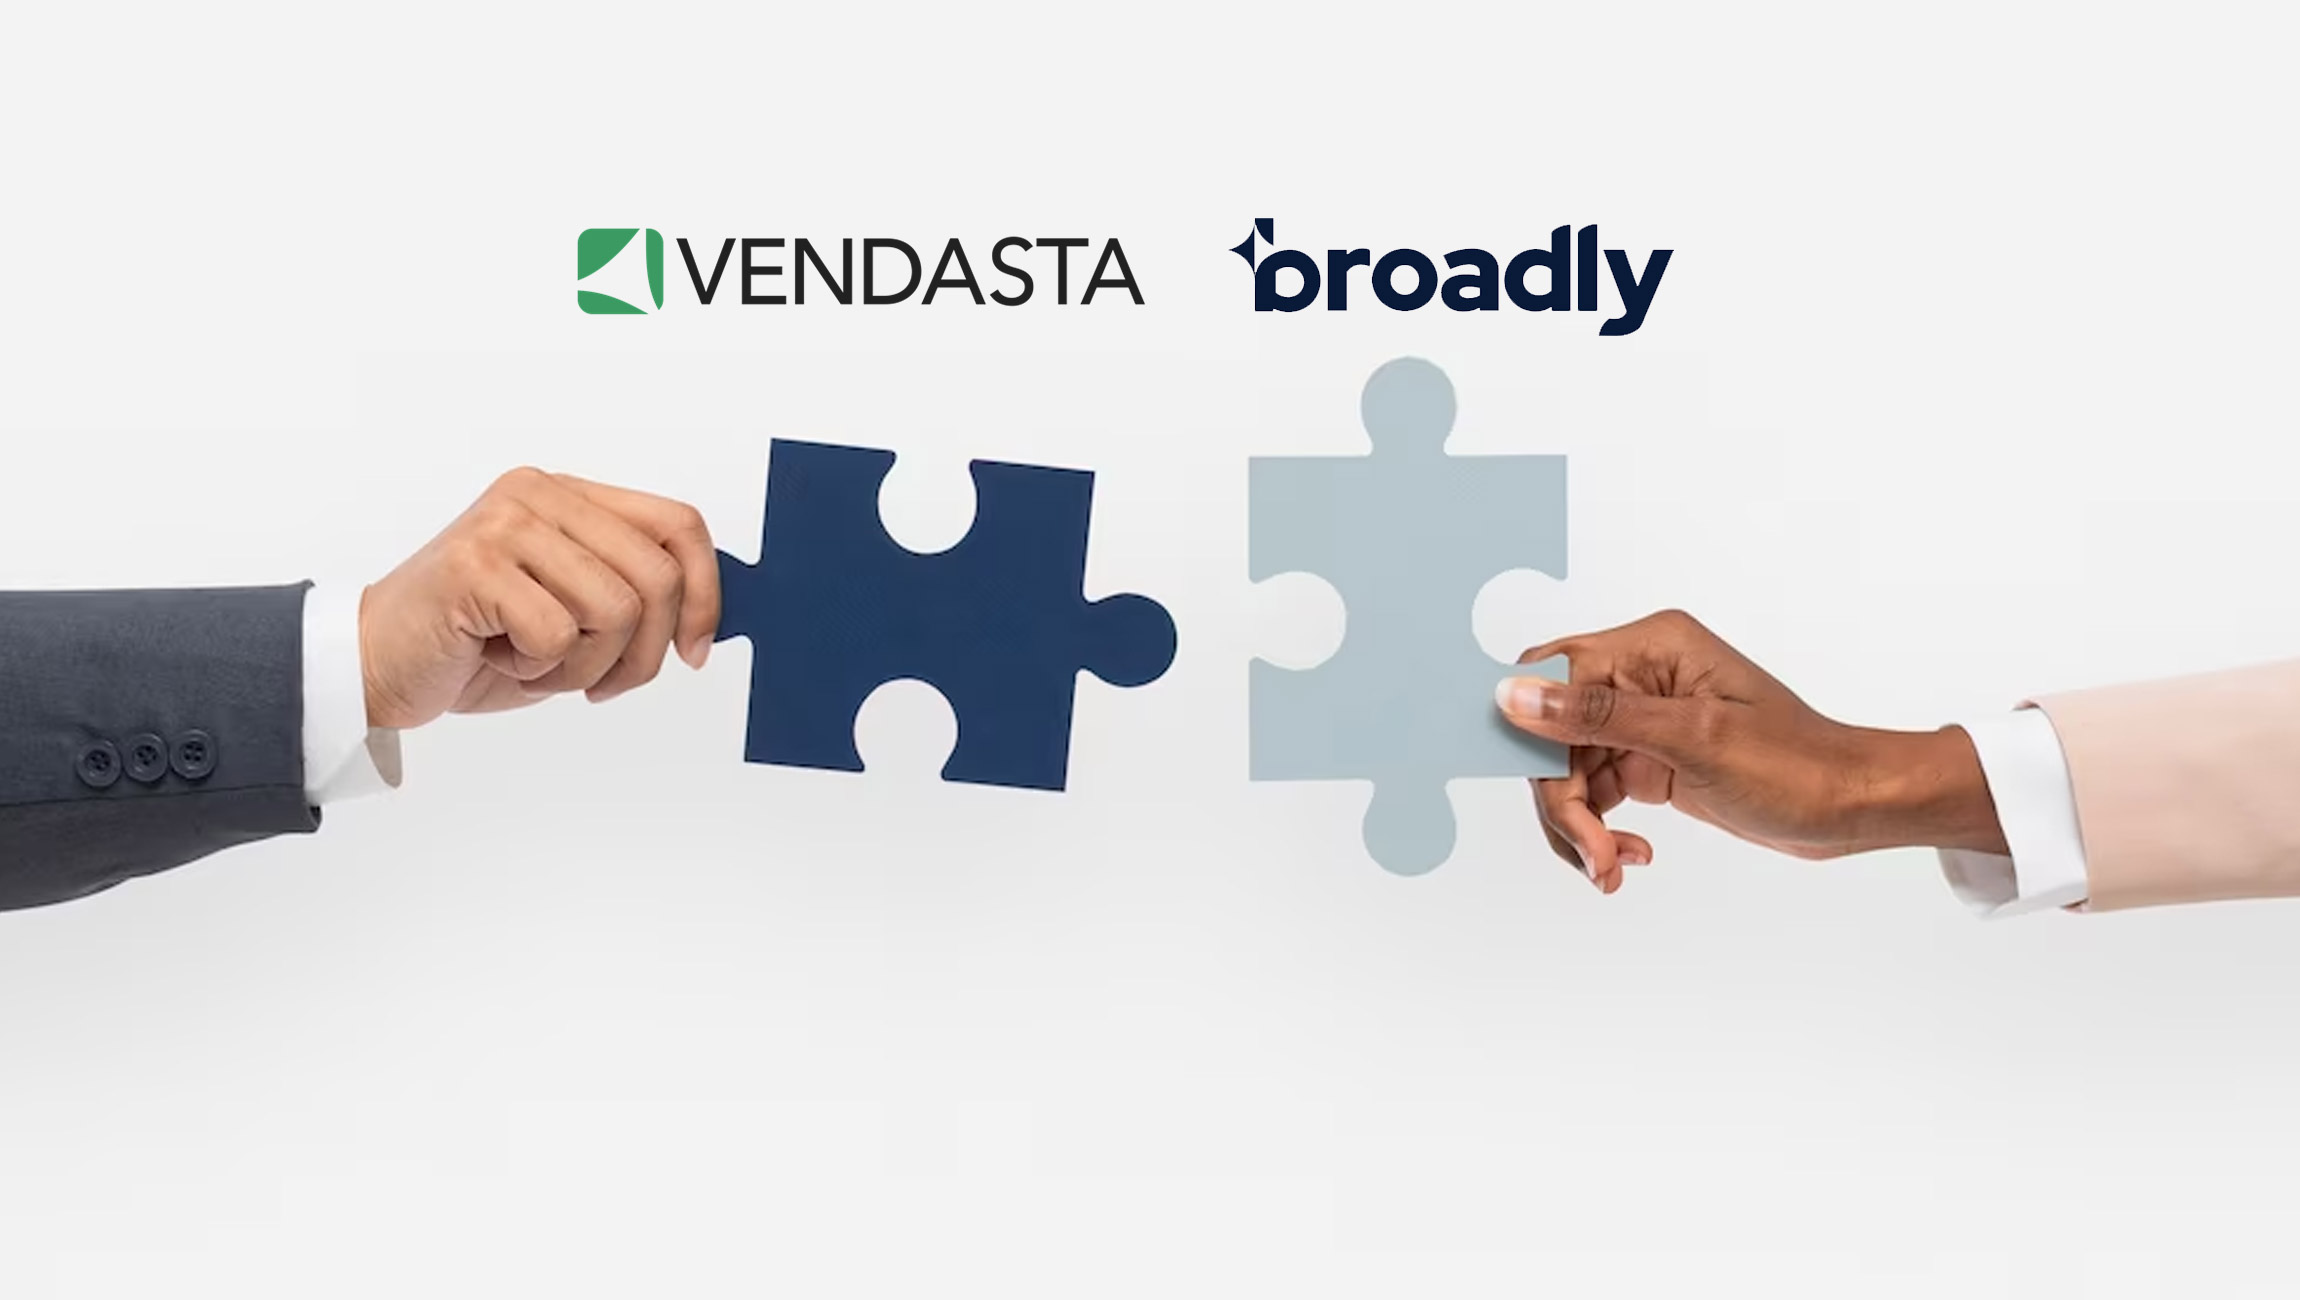 Vendasta Announces Acquisition of Broadly